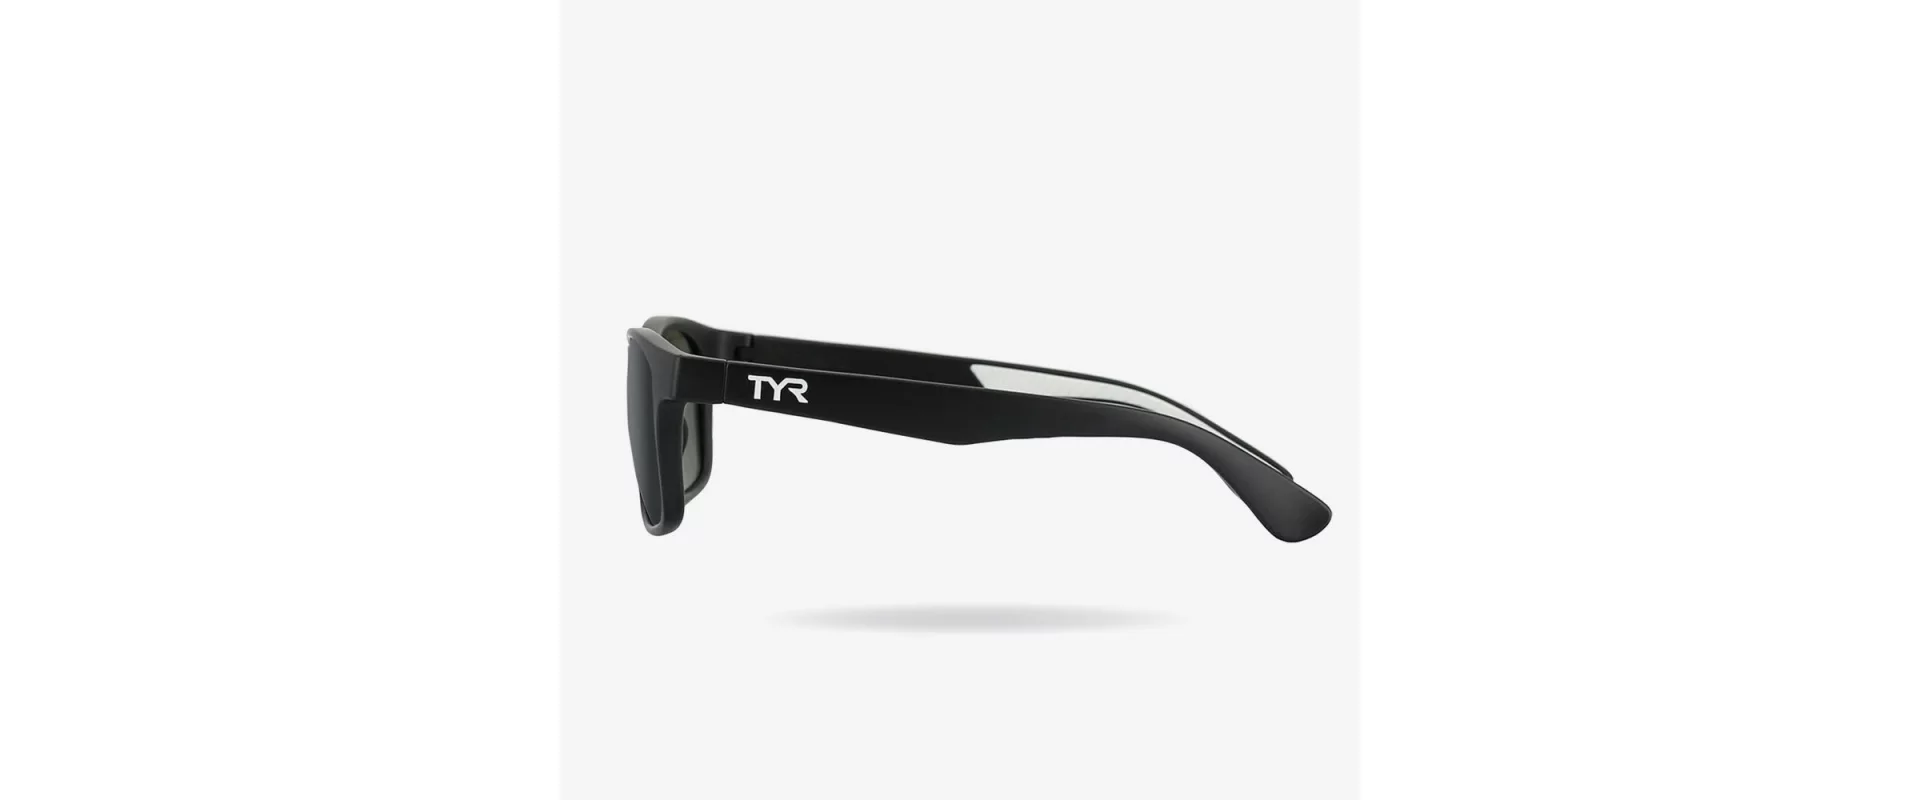 TYR Springdale HTS Sunglasses / Очки солнцезащитные фото 1